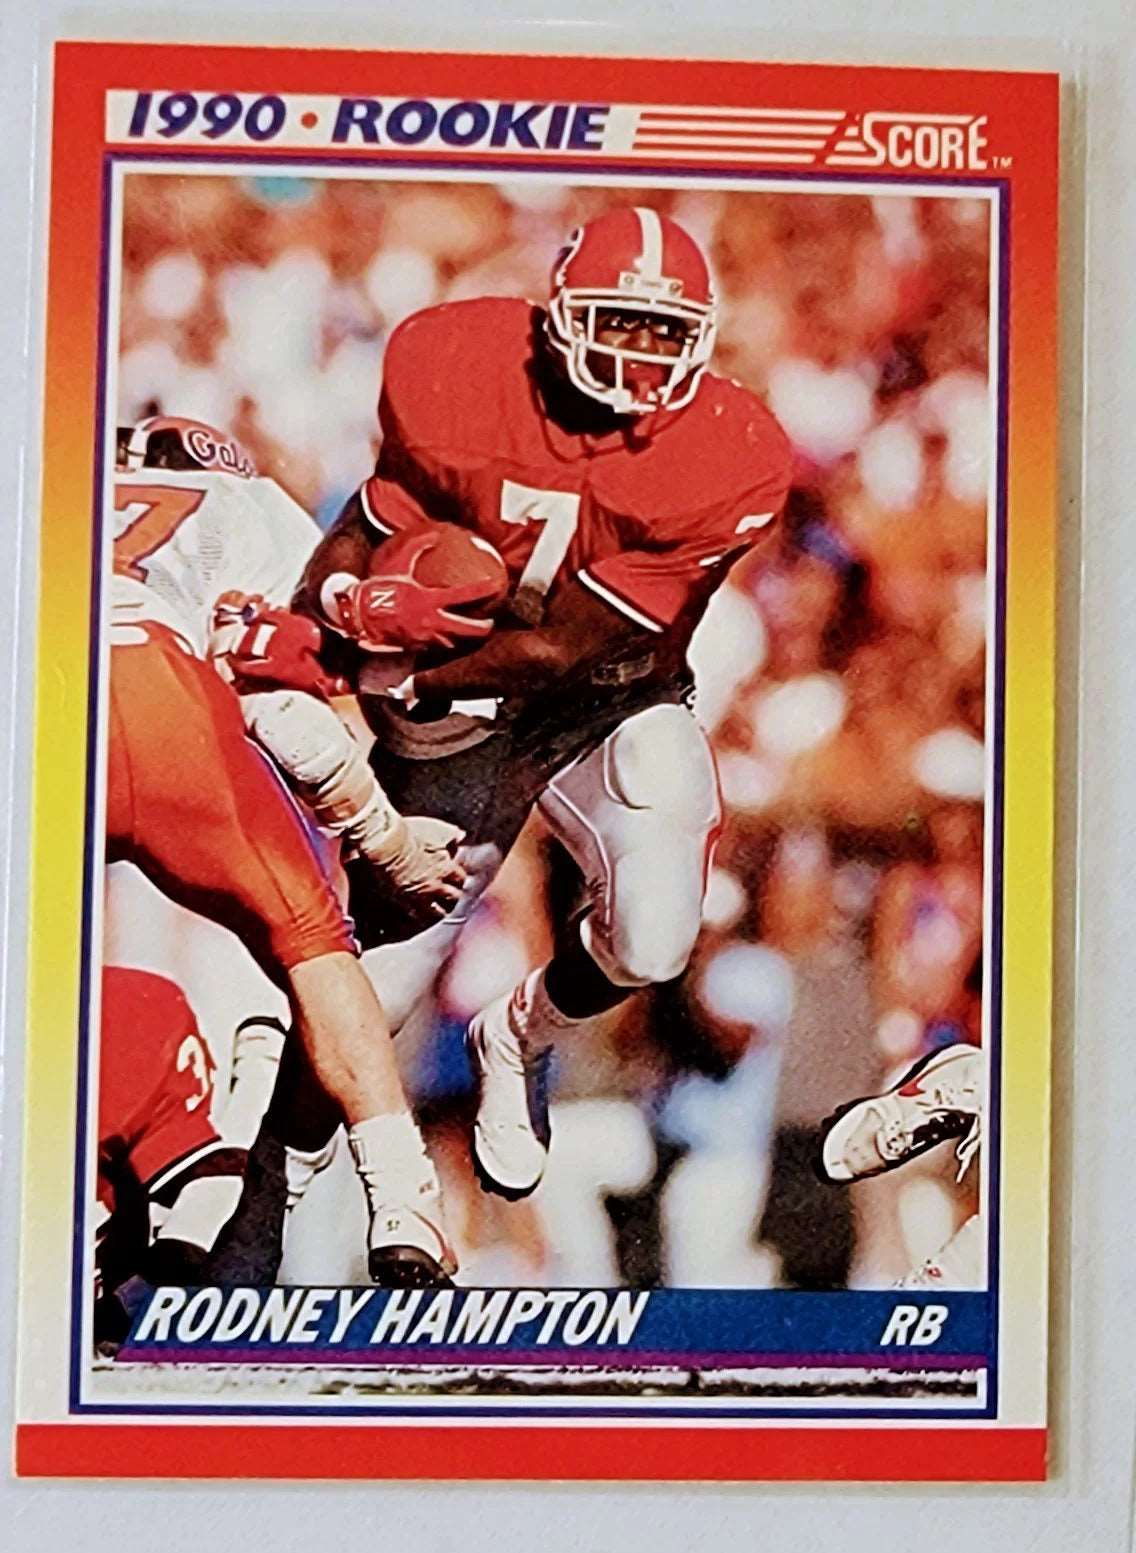 1990 Score Rodney Hampton Rookie Football Card AVM1 simple Xclusive Collectibles   